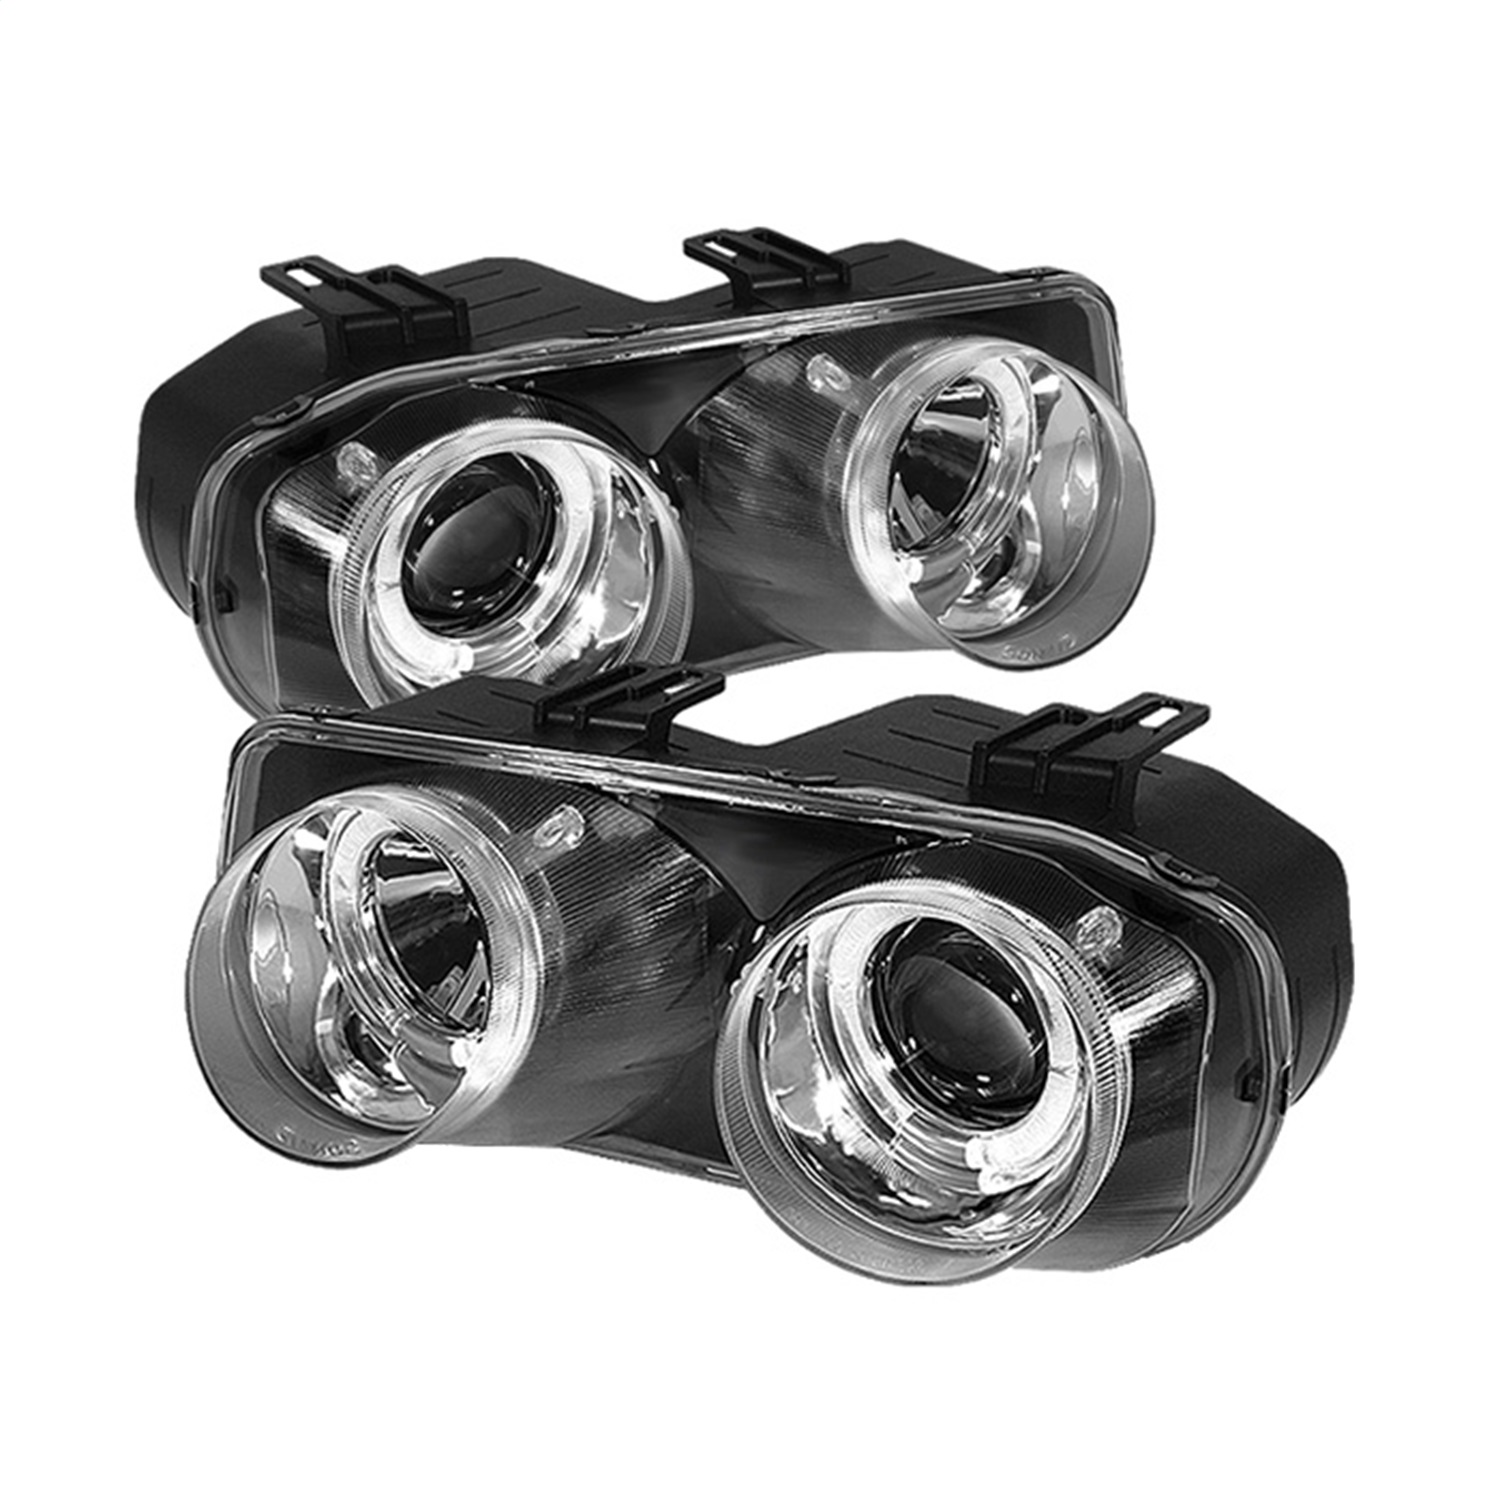 Spyder Auto 5008688 Halo Projector Headlights Fits 94-97 Integra